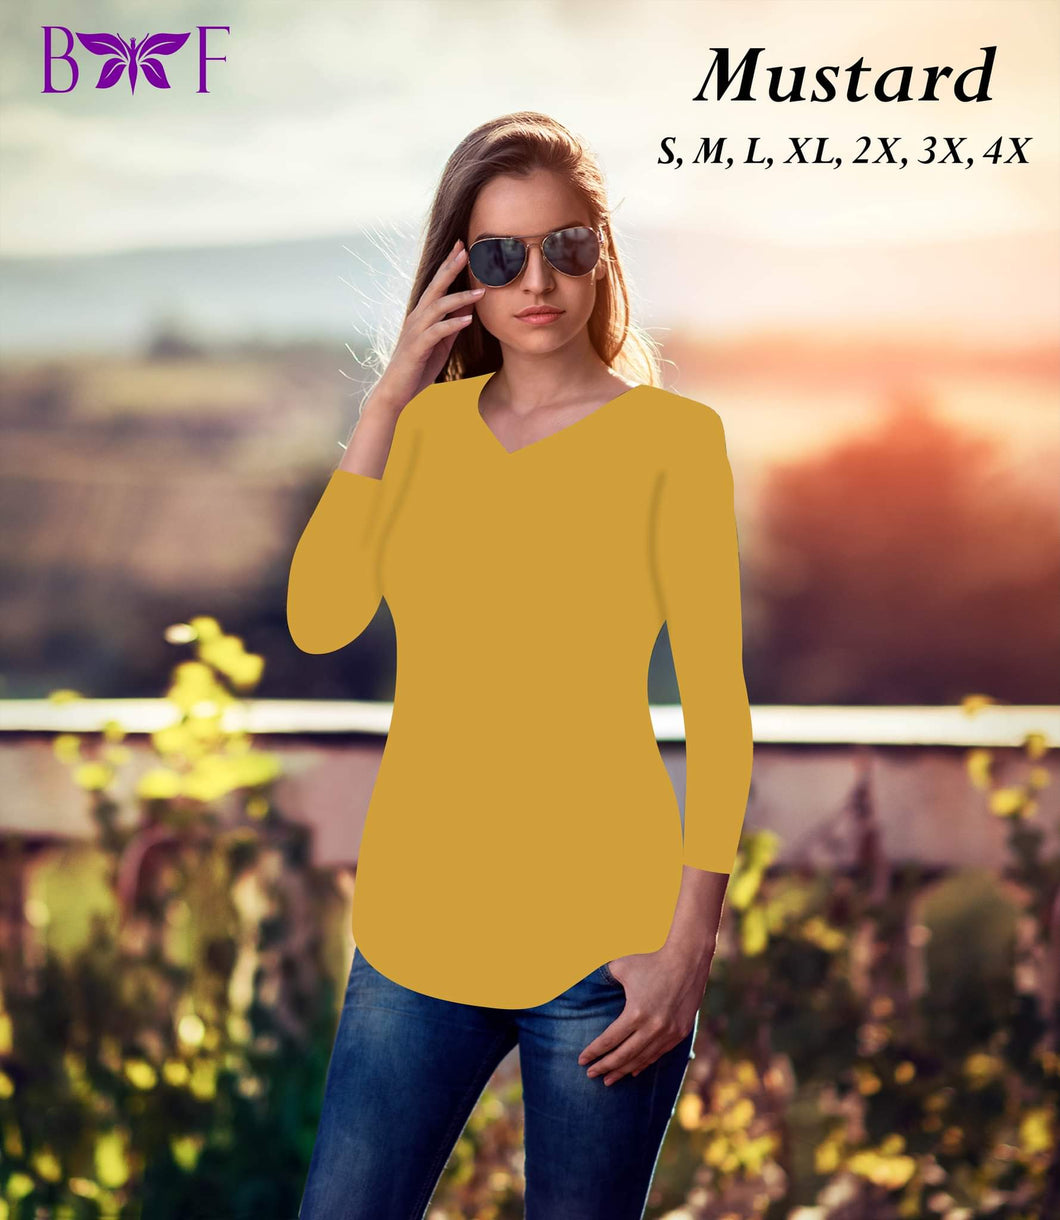 Mustard v-neckline and rounded bottom!